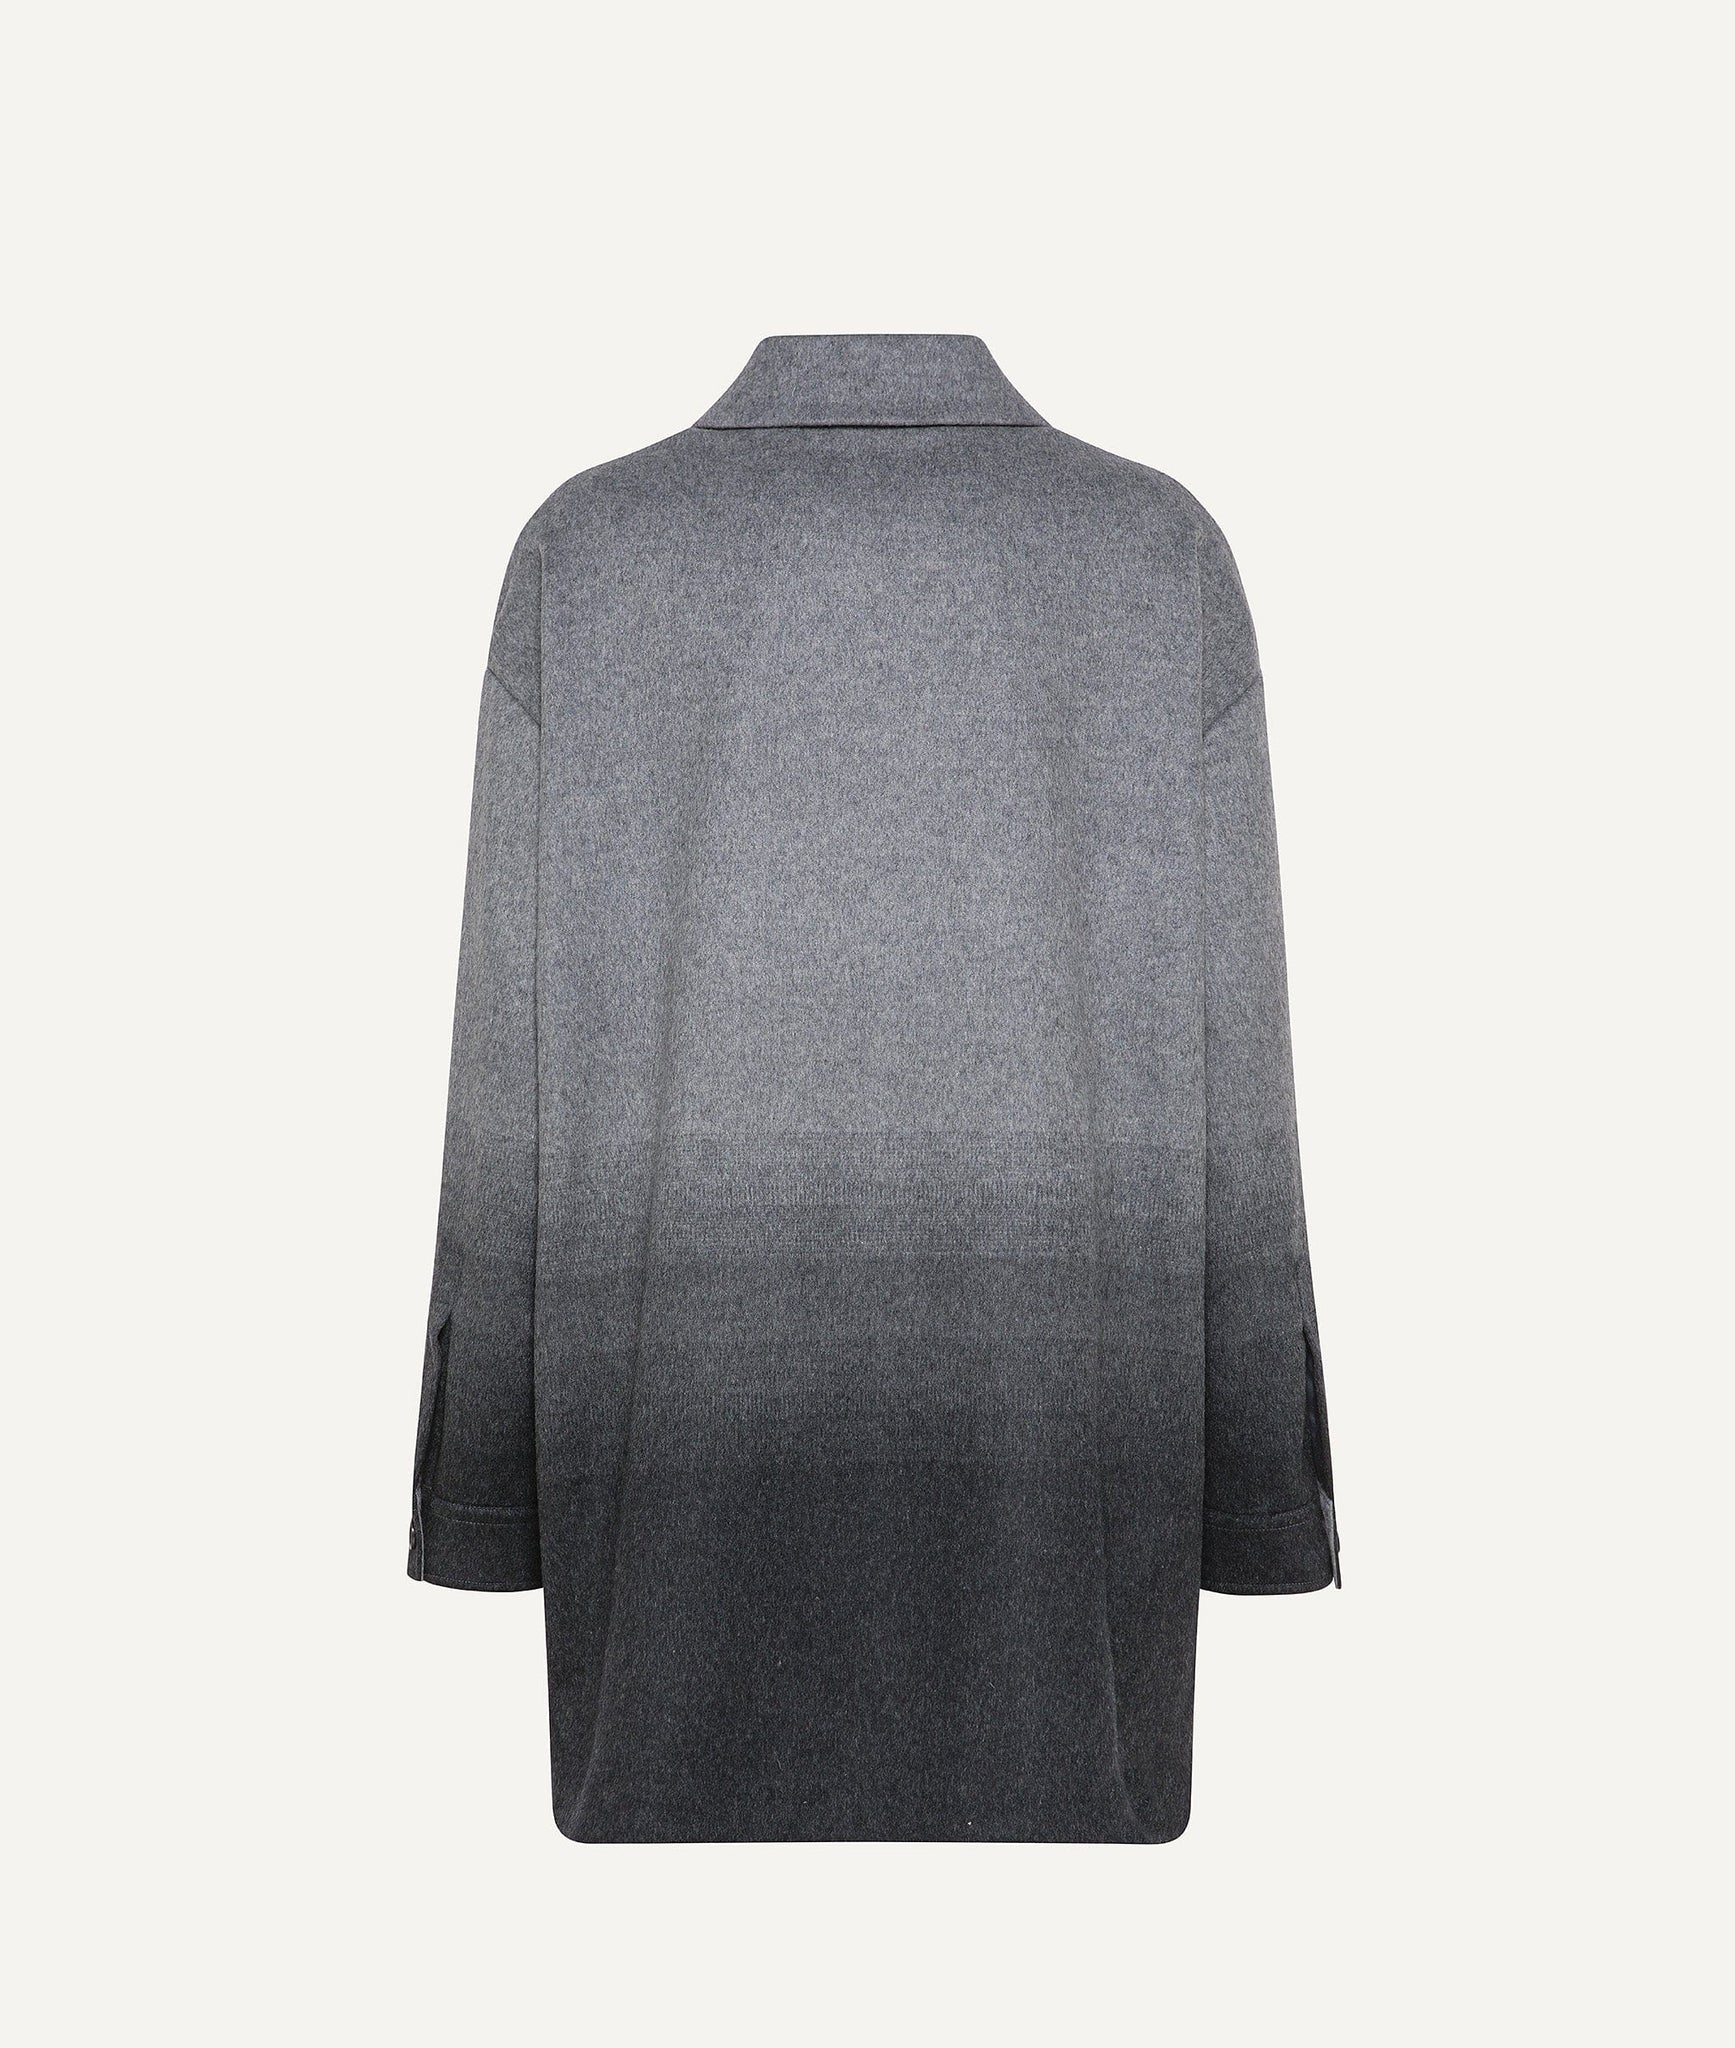 Aspesi - Coat in Wool